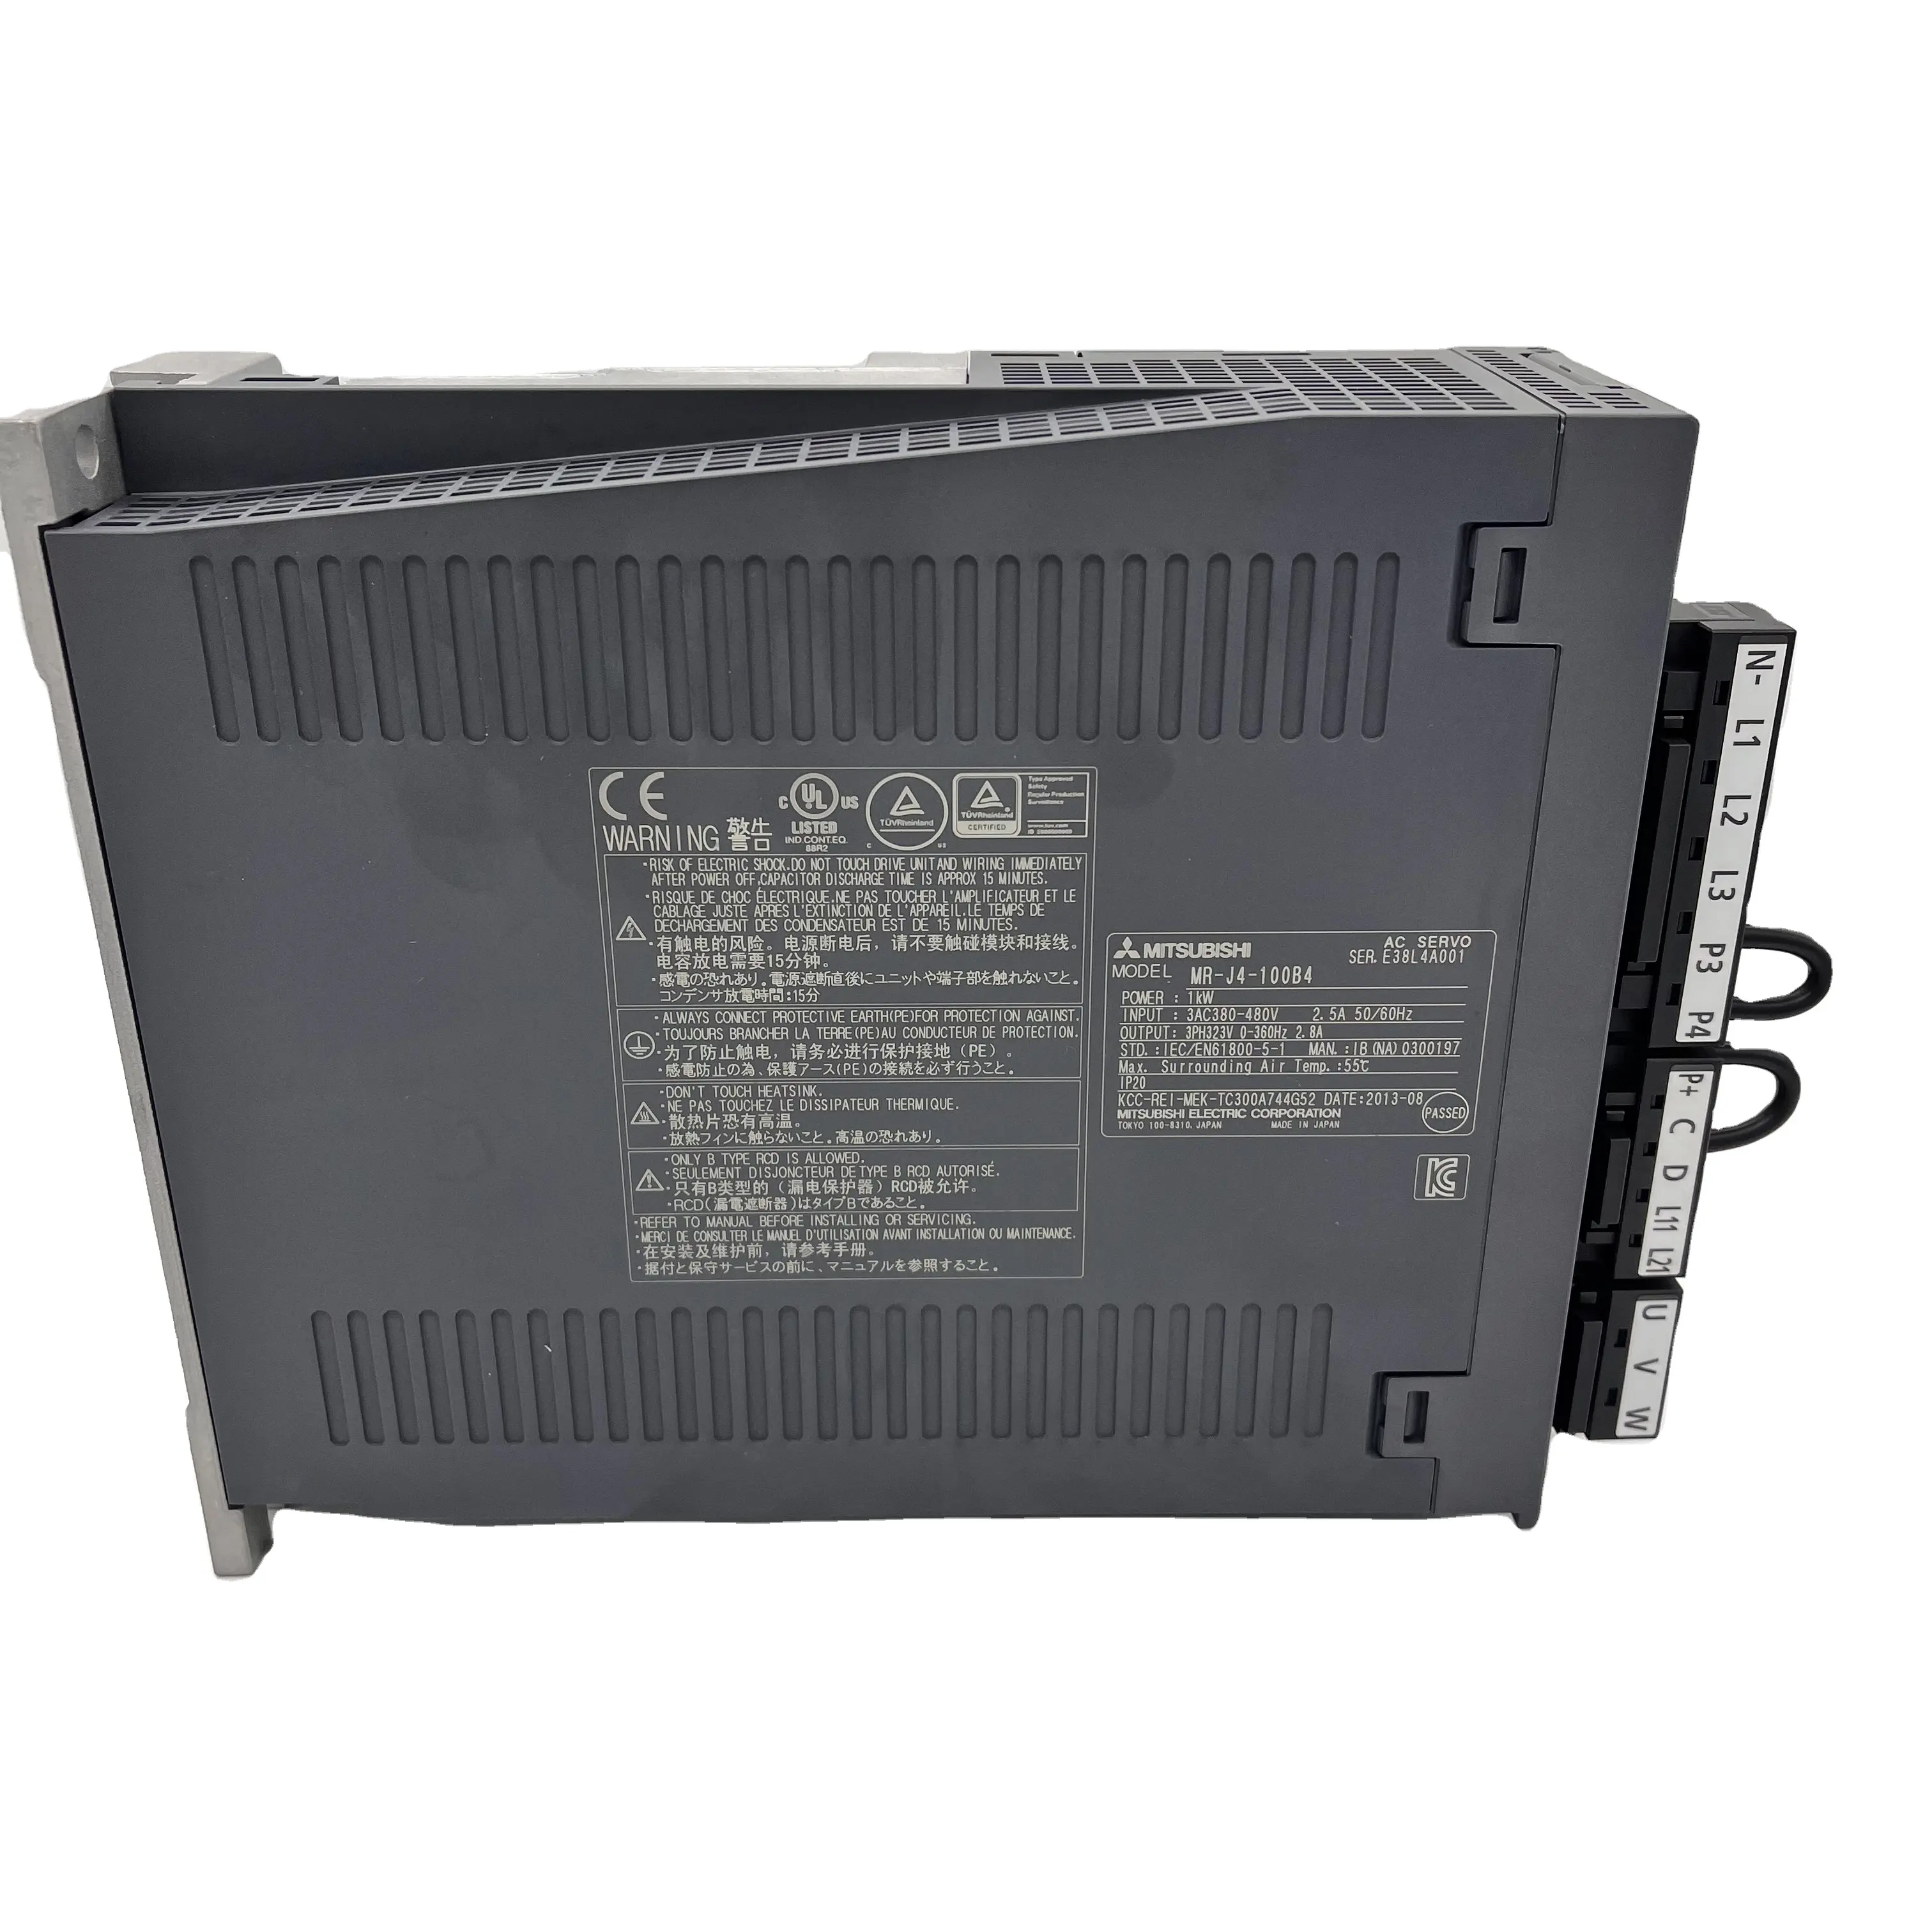 CNC Japan New and Original Plc Servo Amplifier MR-J4-100B4 for MIT